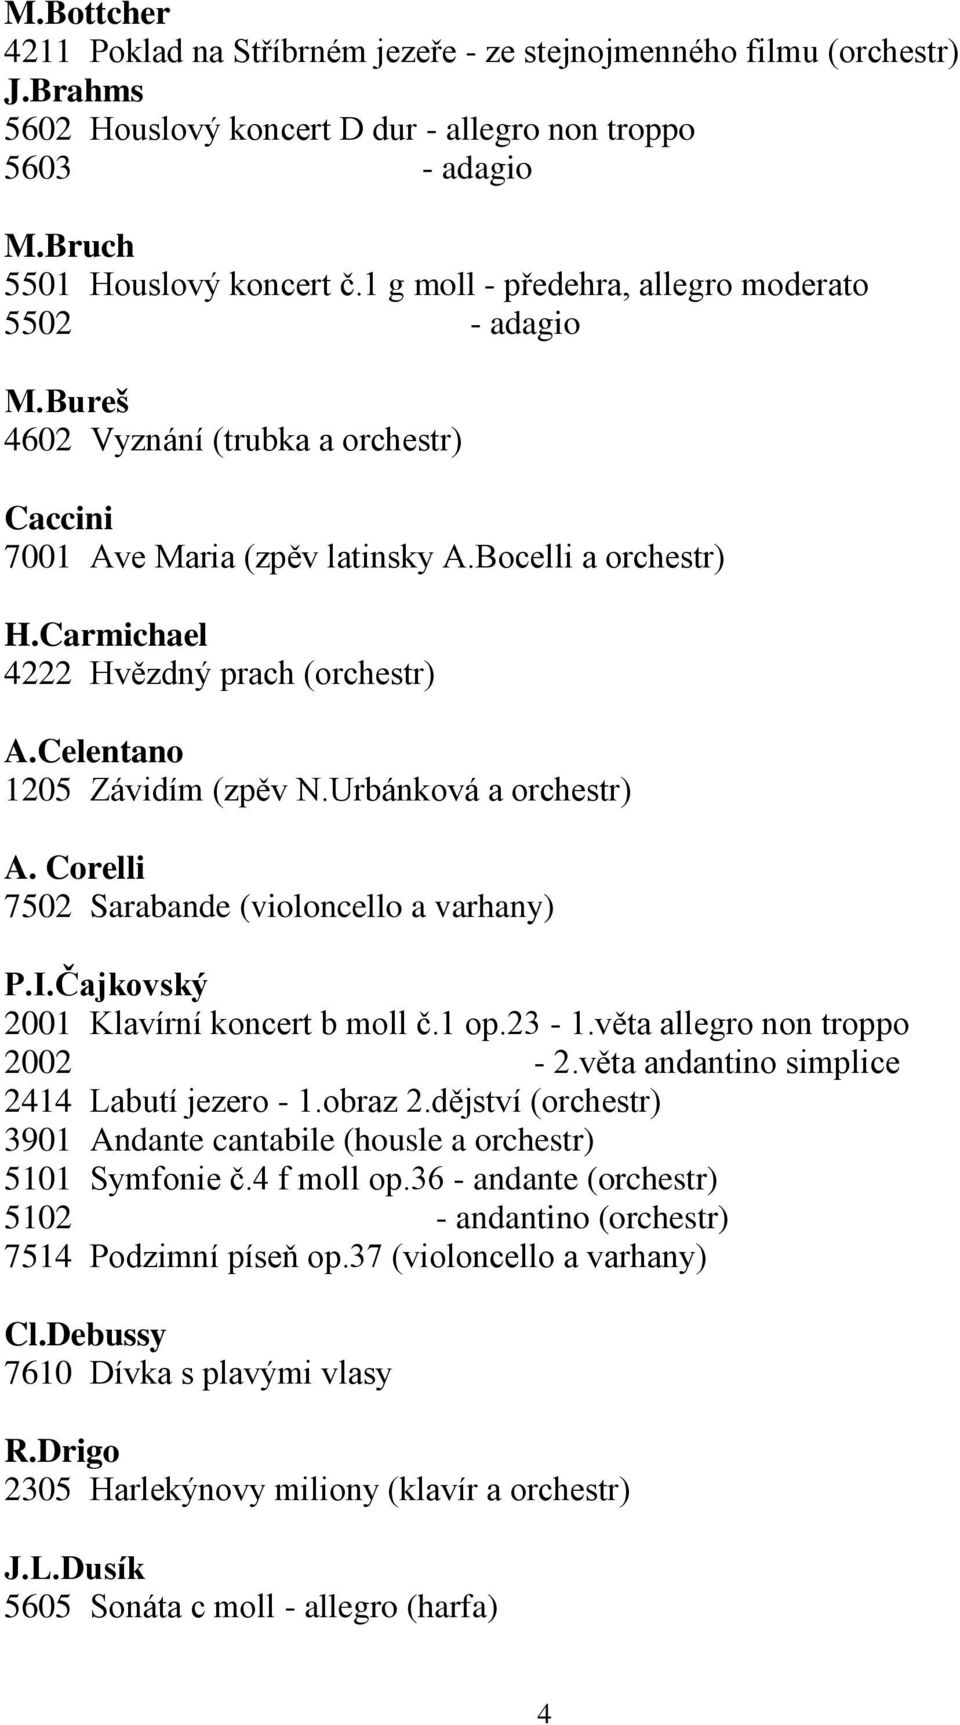 Celentano 1205 Závidím (zpěv N.Urbánková a orchestr) A. Corelli 7502 Sarabande (violoncello a varhany) P.I.Čajkovský 2001 Klavírní koncert b moll č.1 op.23-1.věta allegro non troppo 2002-2.